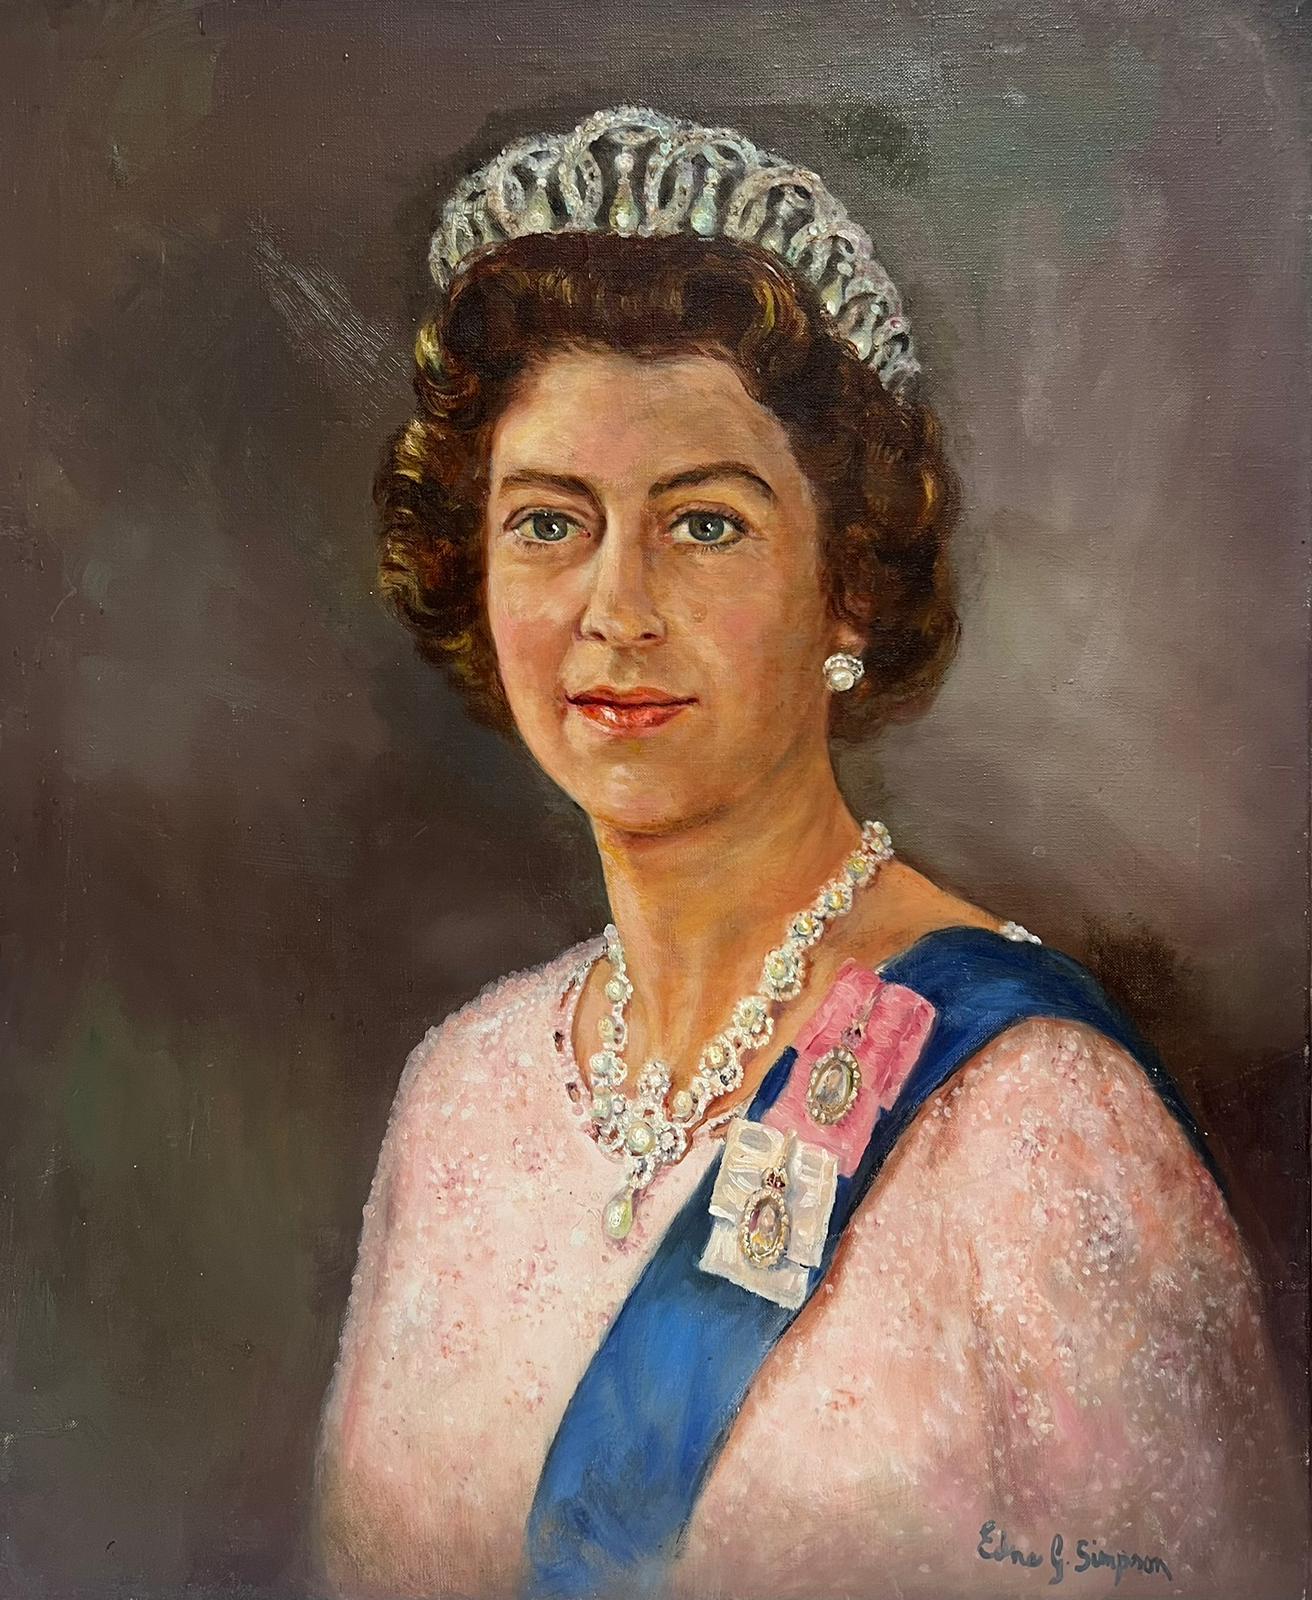 Edne Simpson Figurative Painting - HM Queen Elizabeth II Portrait British Oil Painting signed oil on canvas